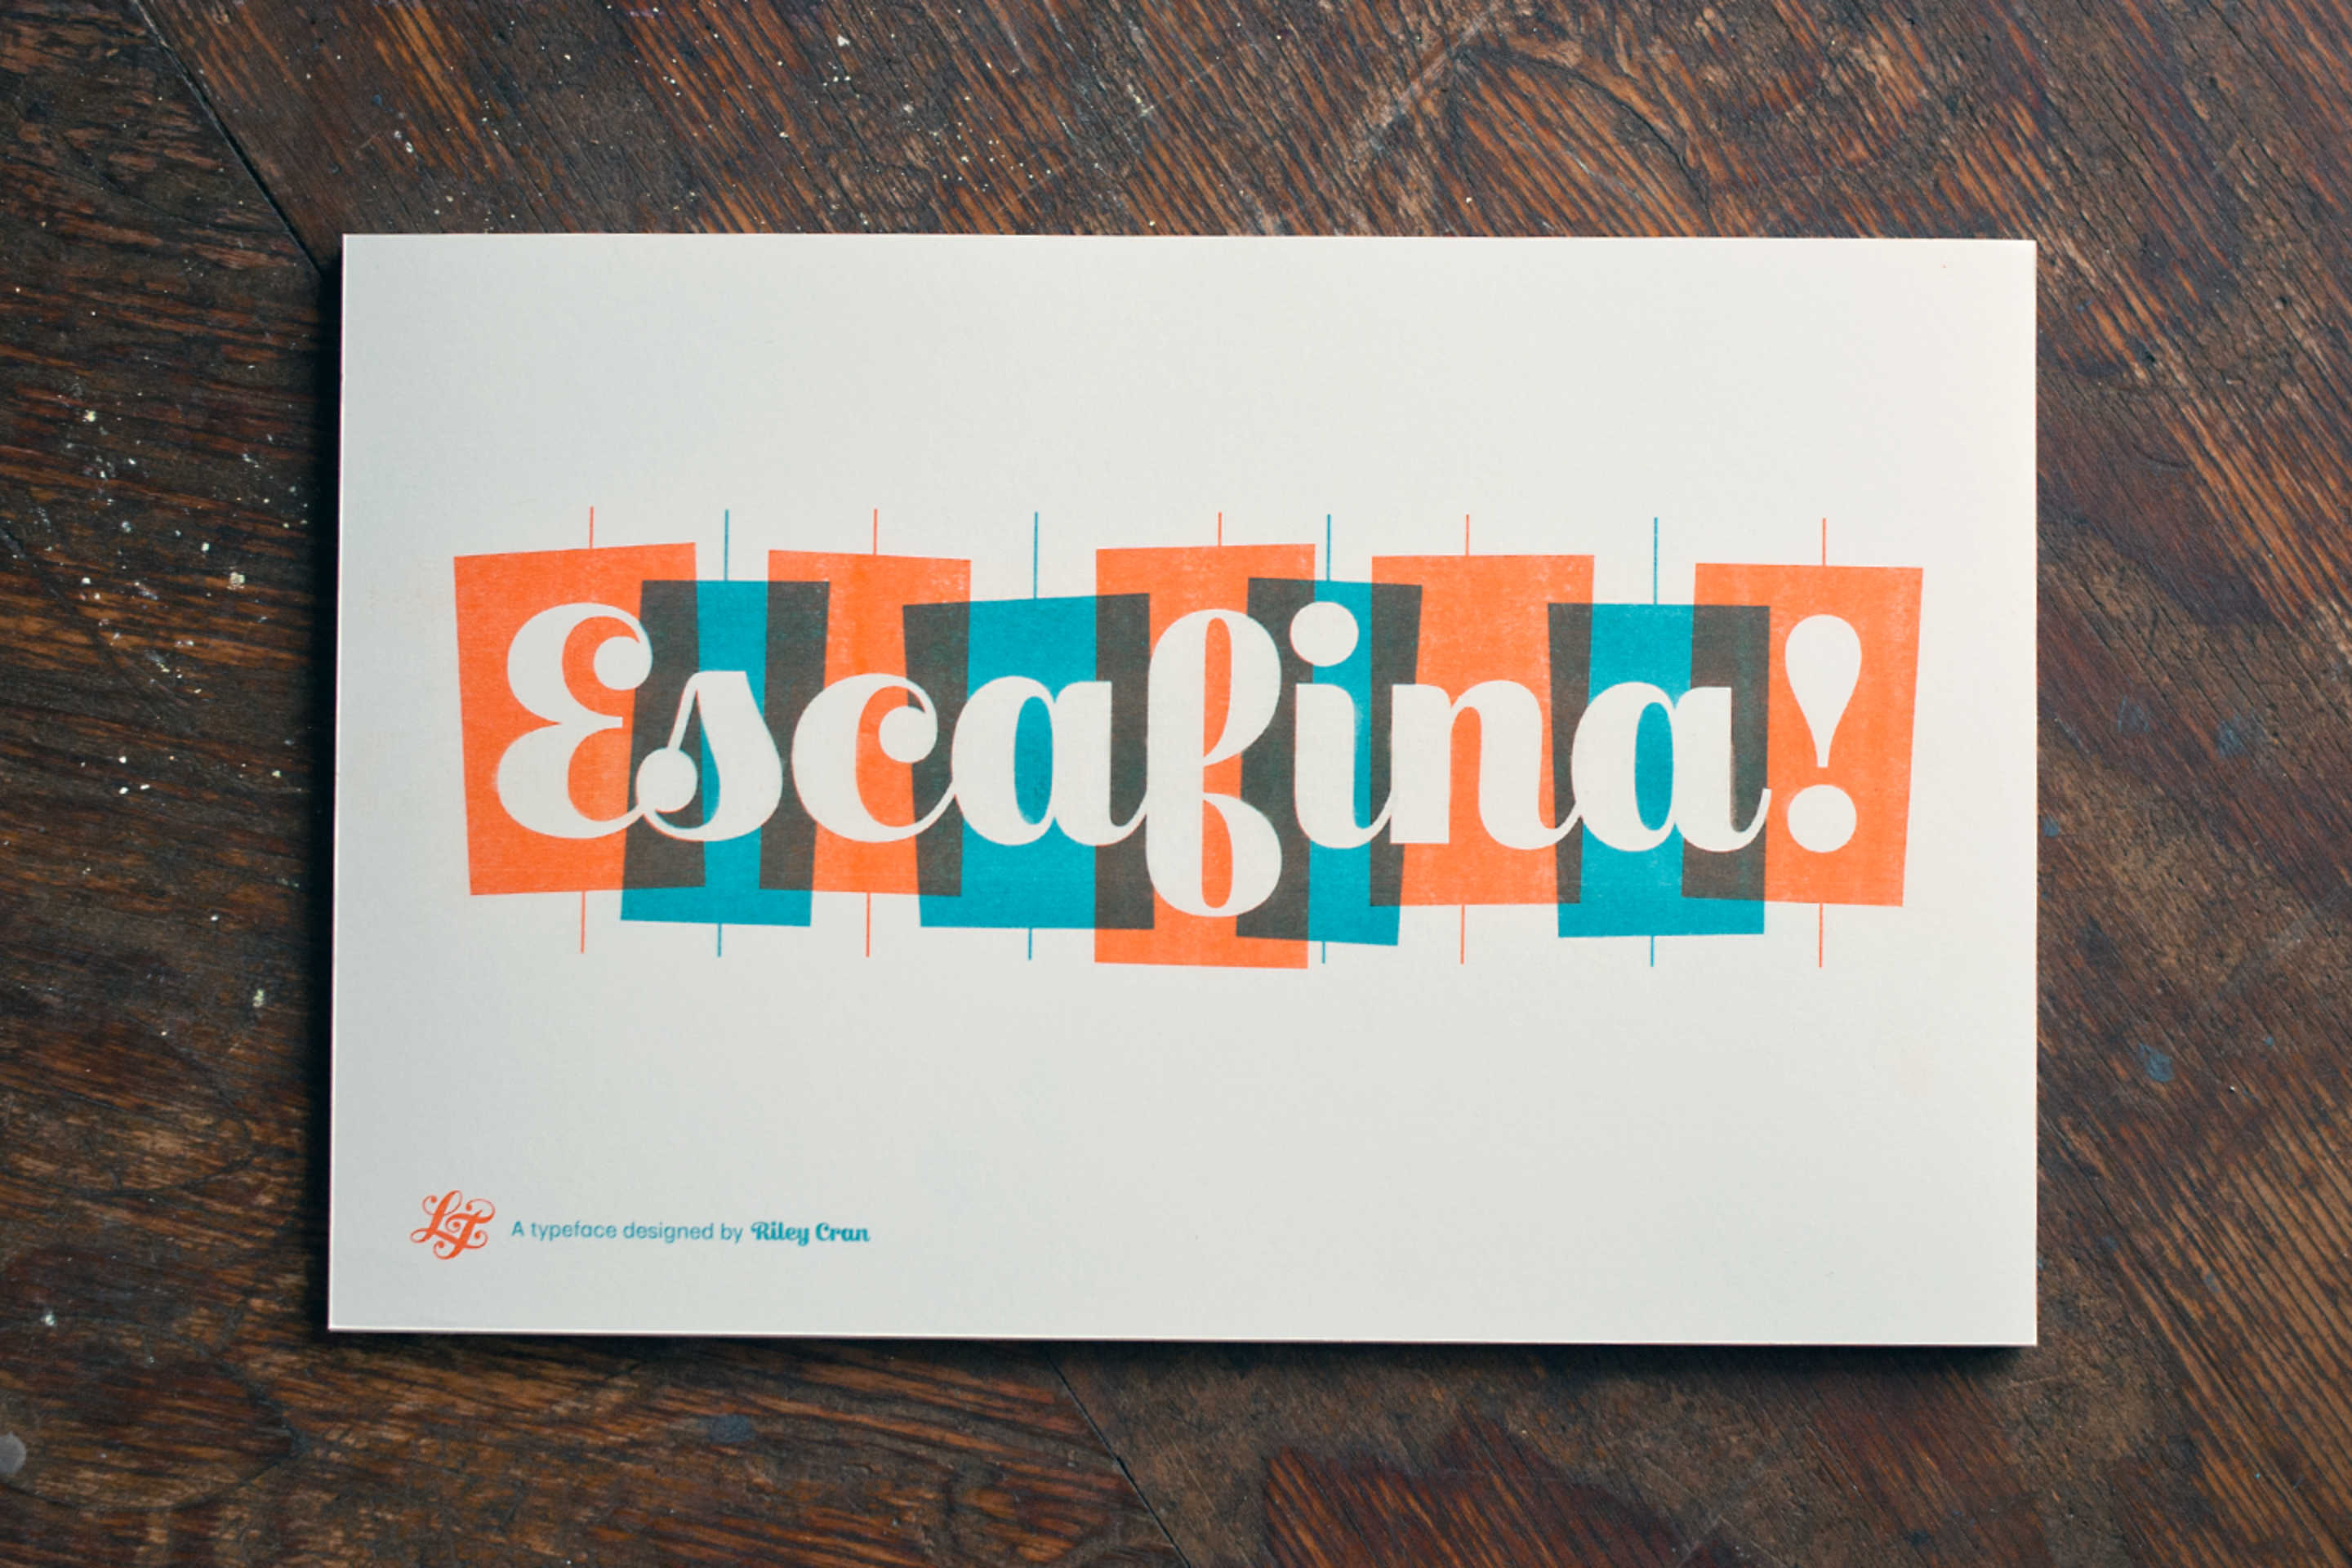 A risograph print using the Escafina typeface.